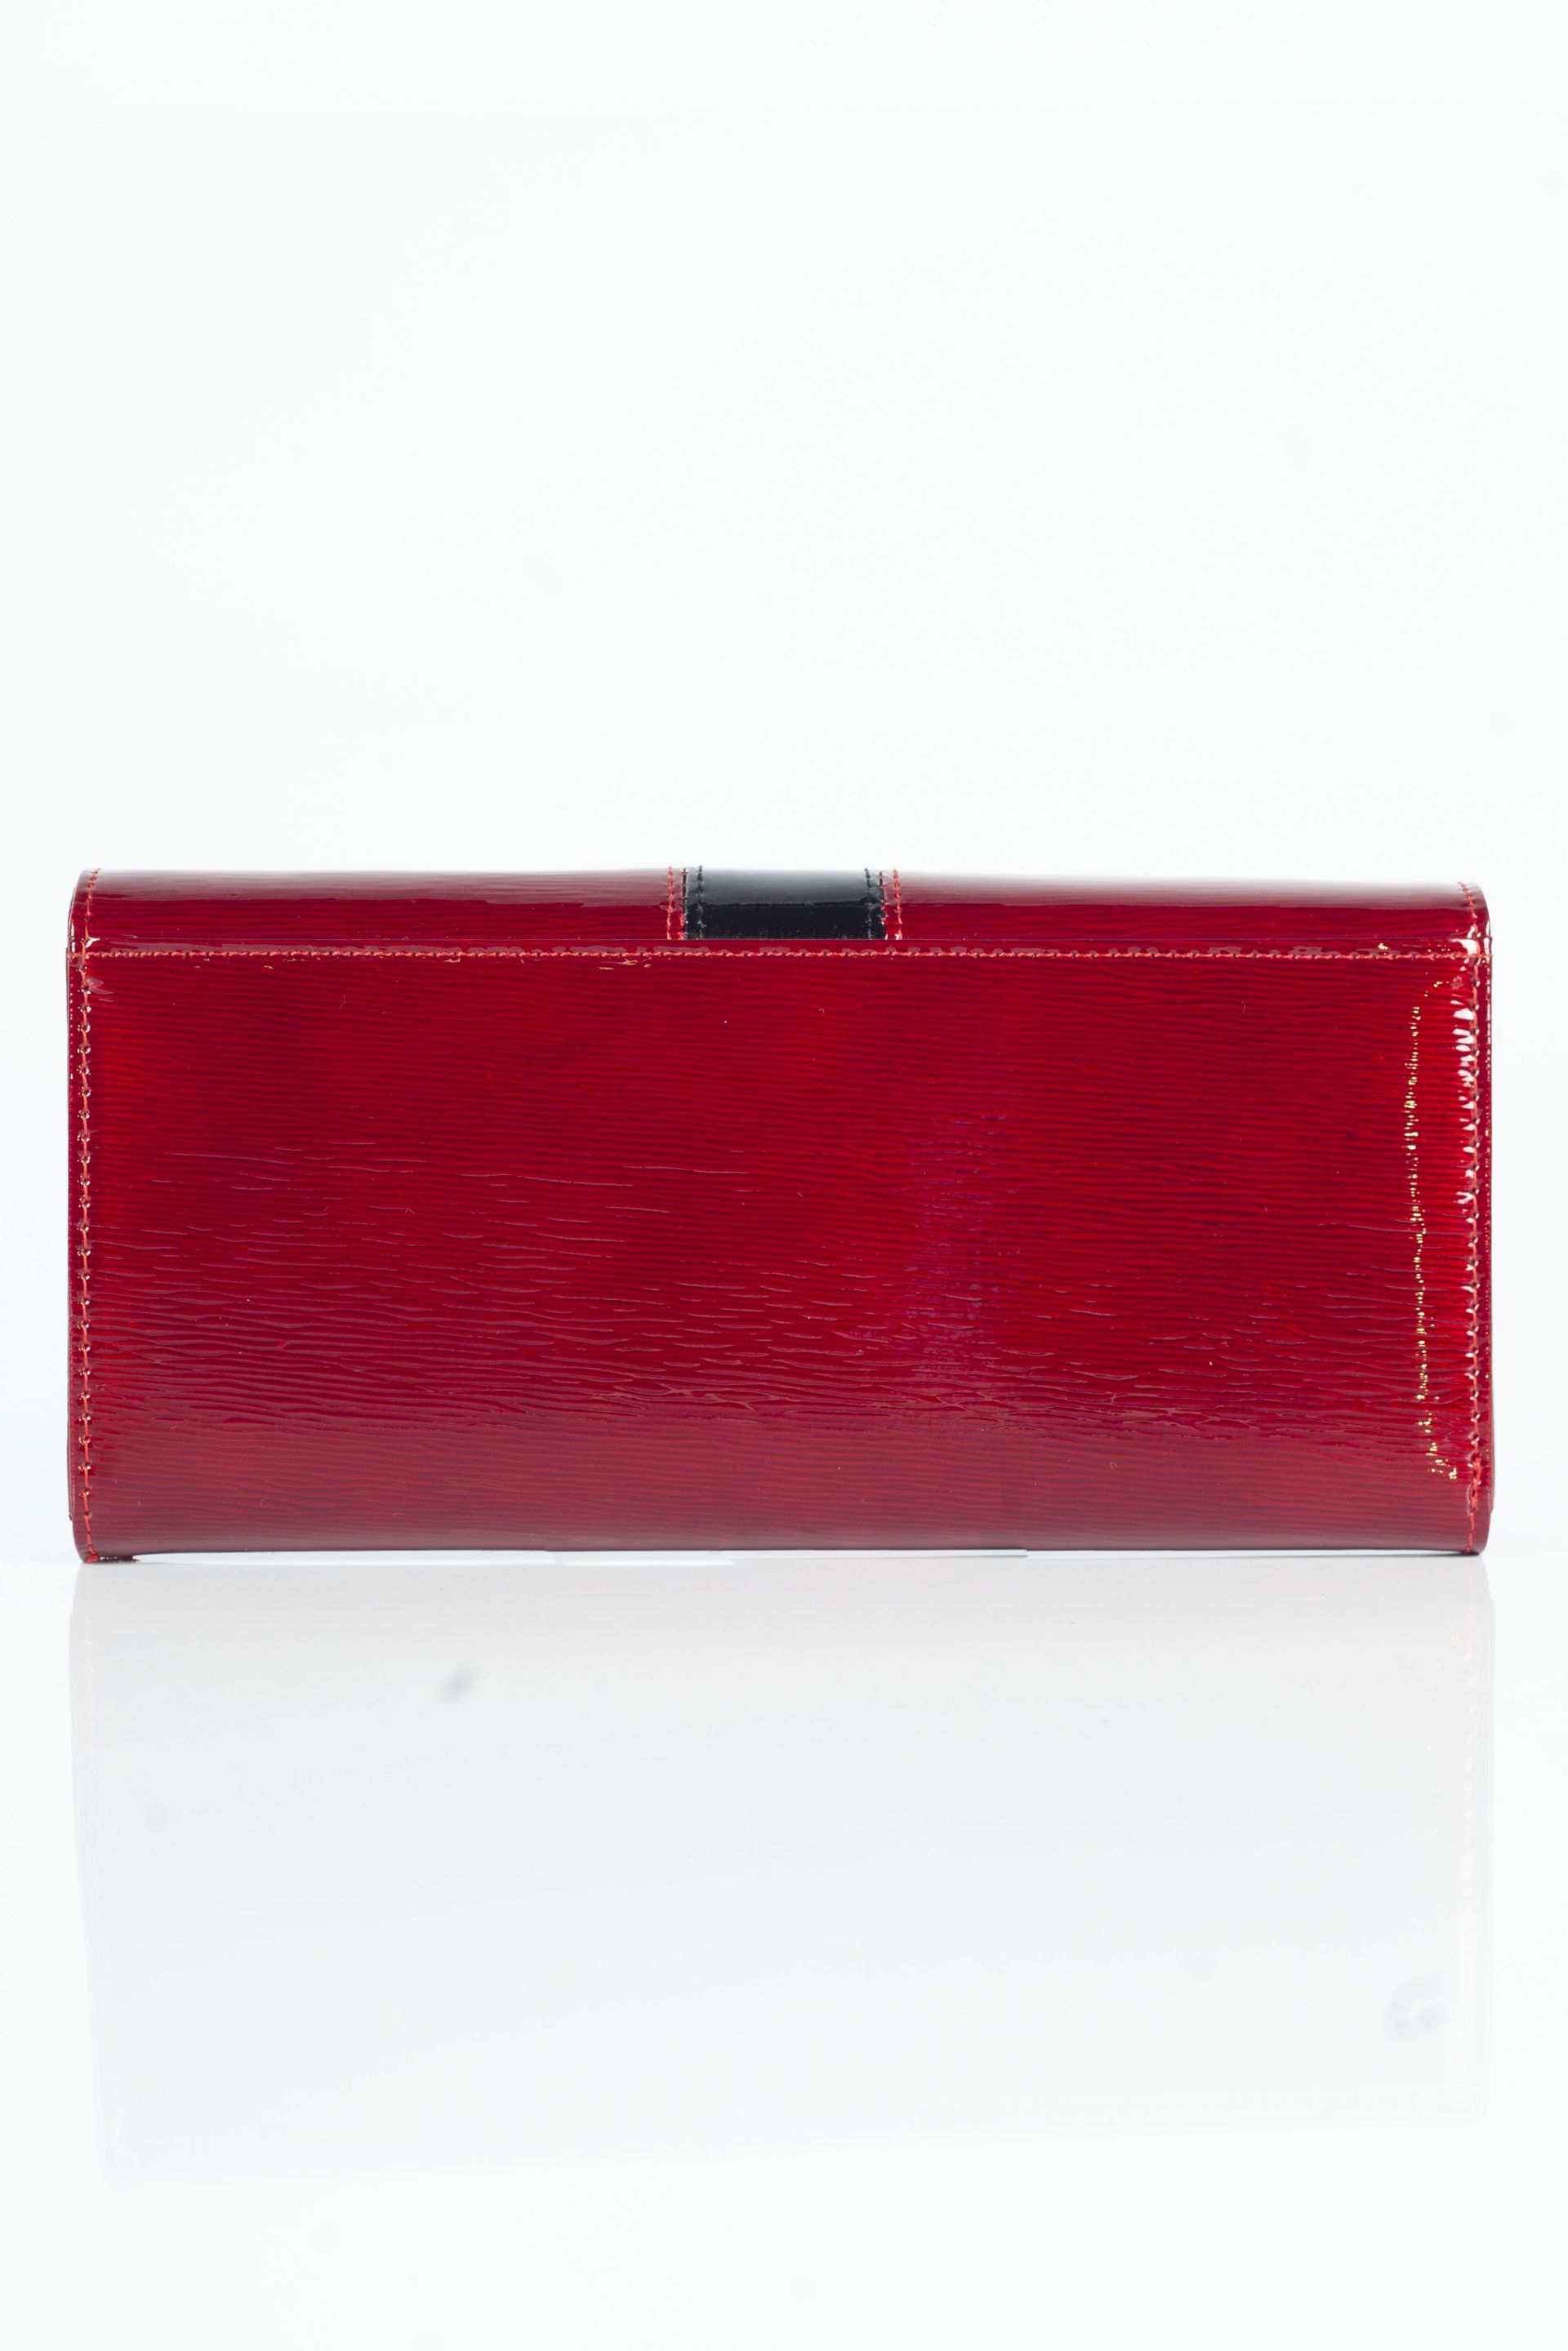 Wallet LORENTI GD27-SH-9917-RED-BLACK